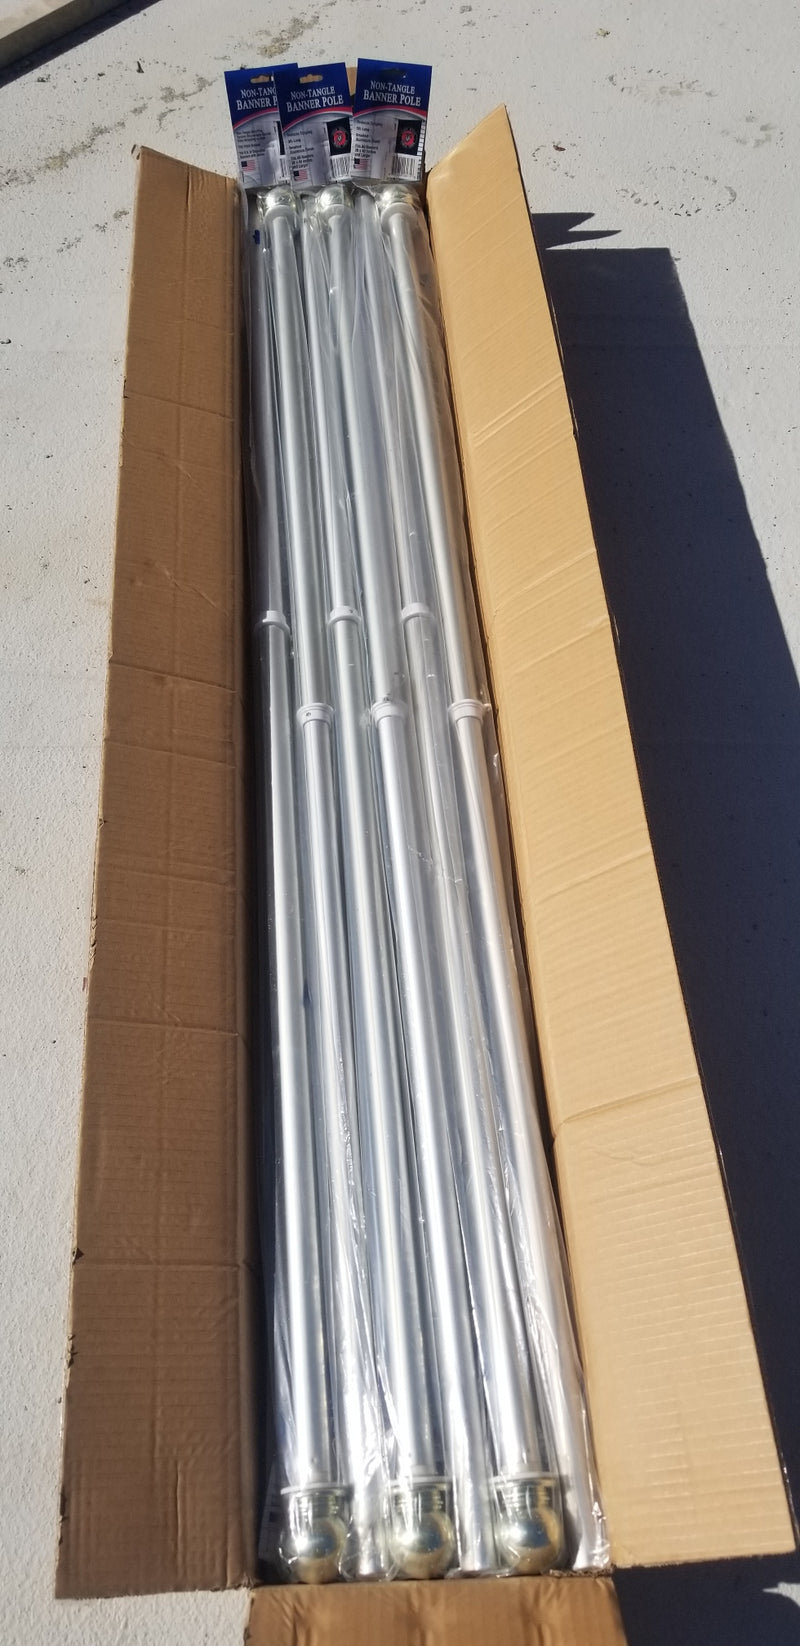 One Dozen American Aluminum Silver Spinning Flag Poles Rotating Clips 12 Pack 5 Feet Flagpoles 1" Diameter Super Sale